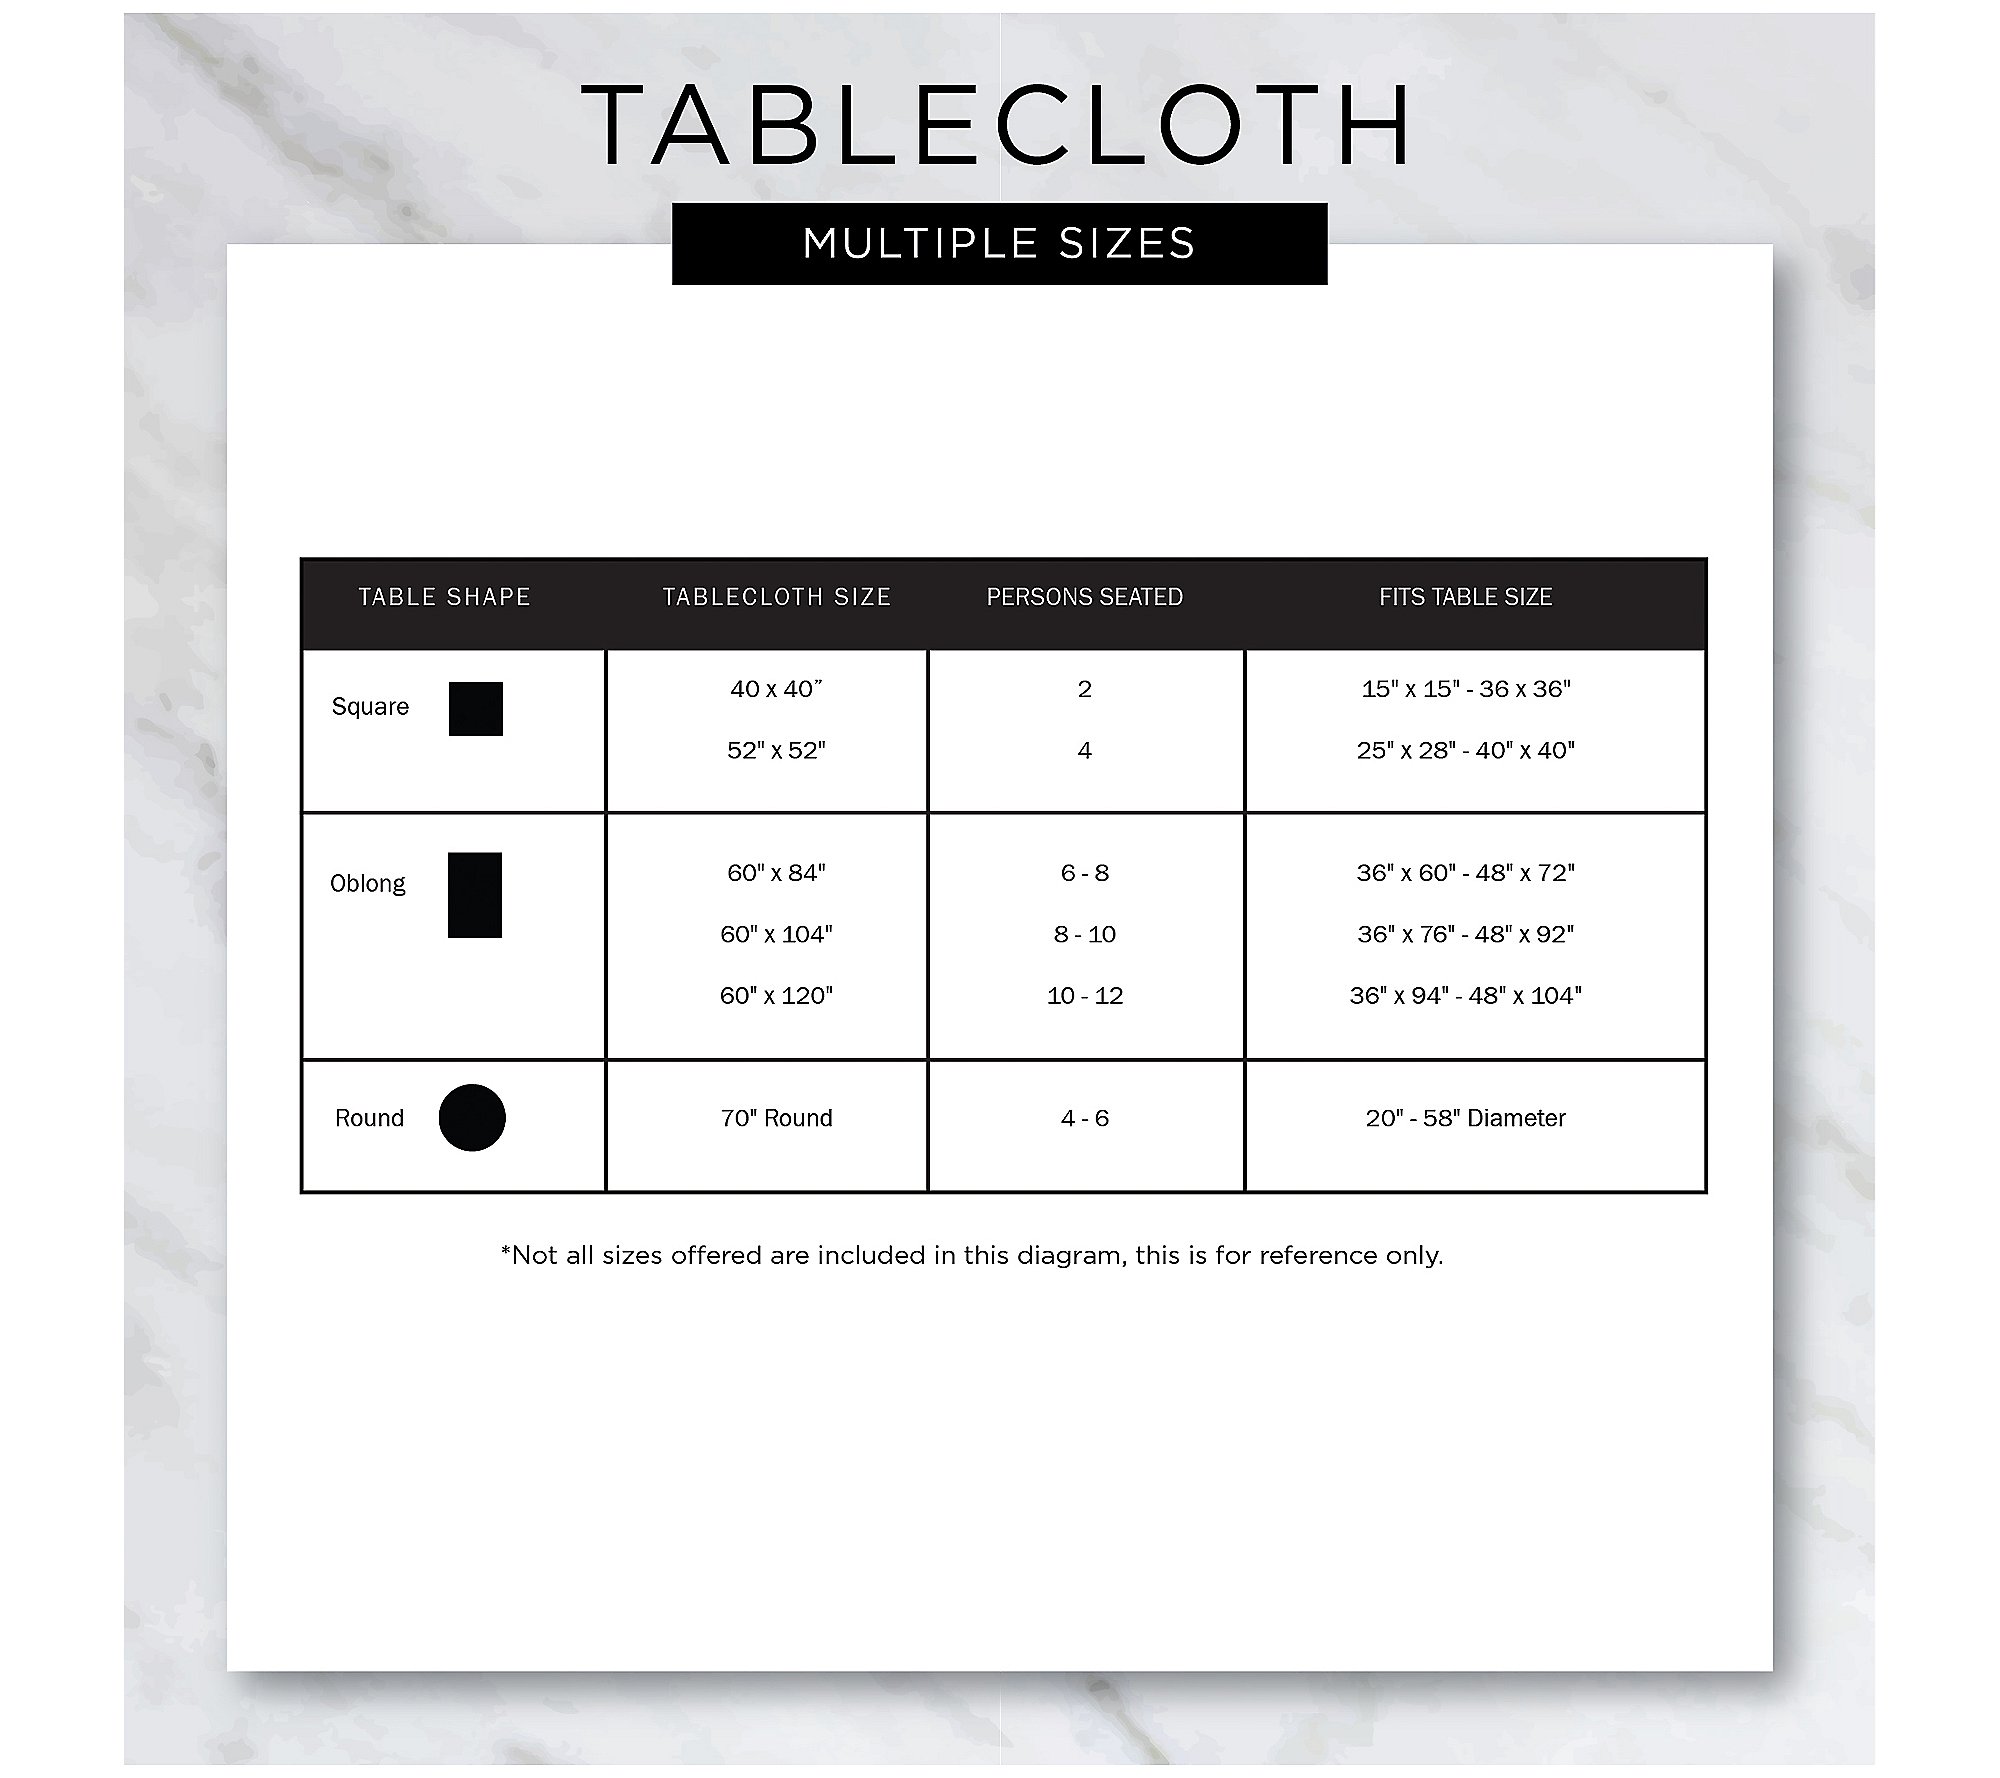 Design Imports Glad Tidings Plaid Tablecloth 52